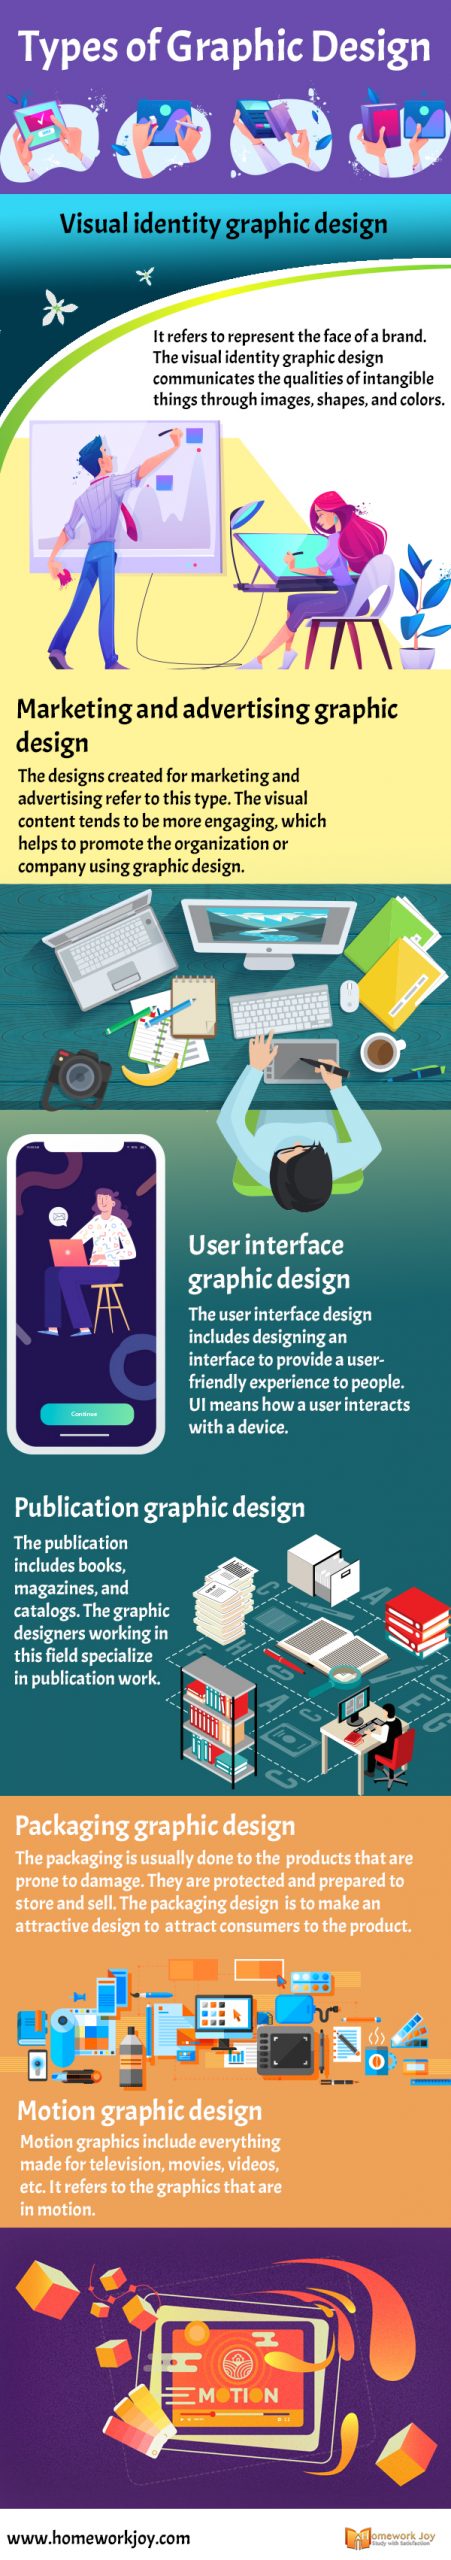 Types of graphic design